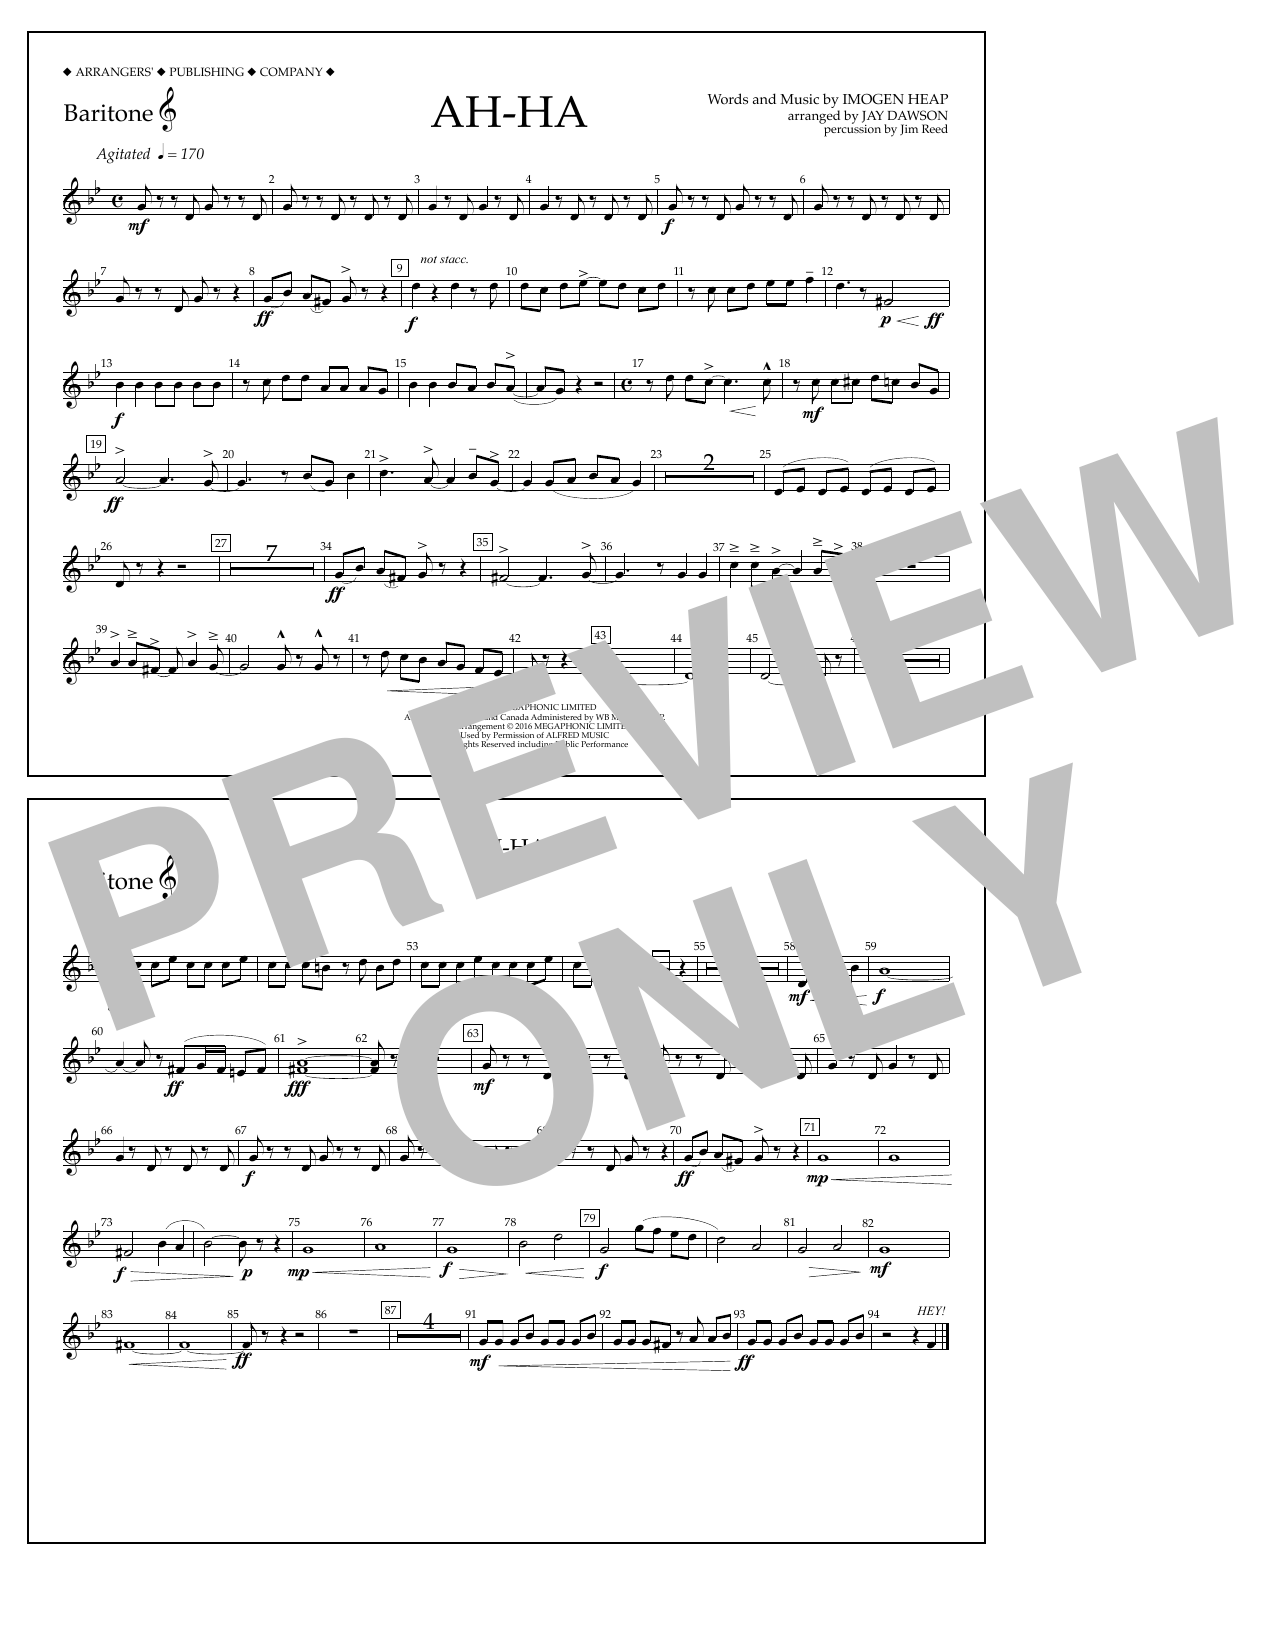 Jay Dawson Ah-ha - Baritone T.C. Sheet Music Notes & Chords for Marching Band - Download or Print PDF